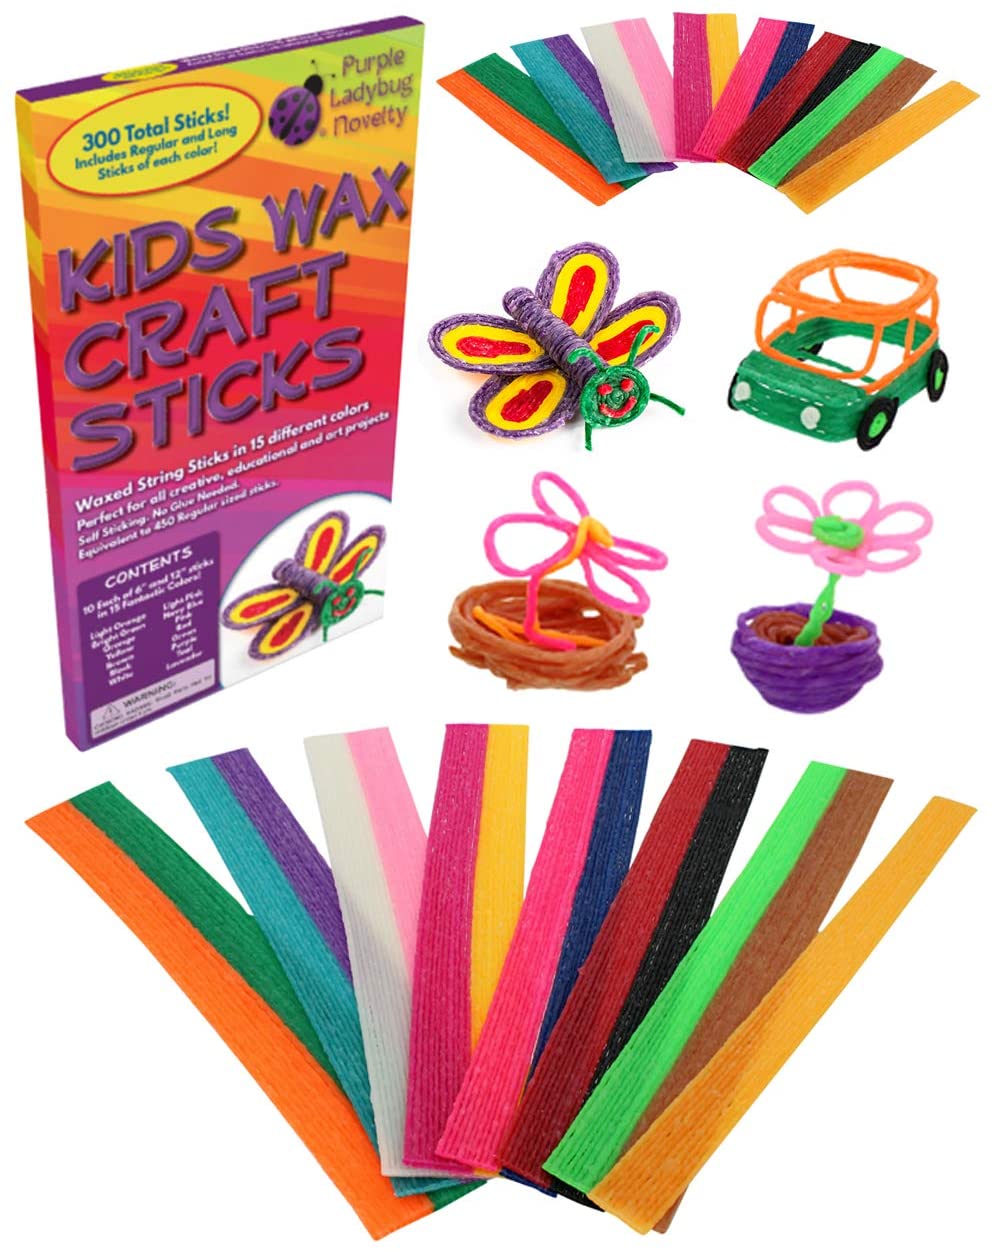 Purple Ladybug Non-Toxic Wax Craft Sticks